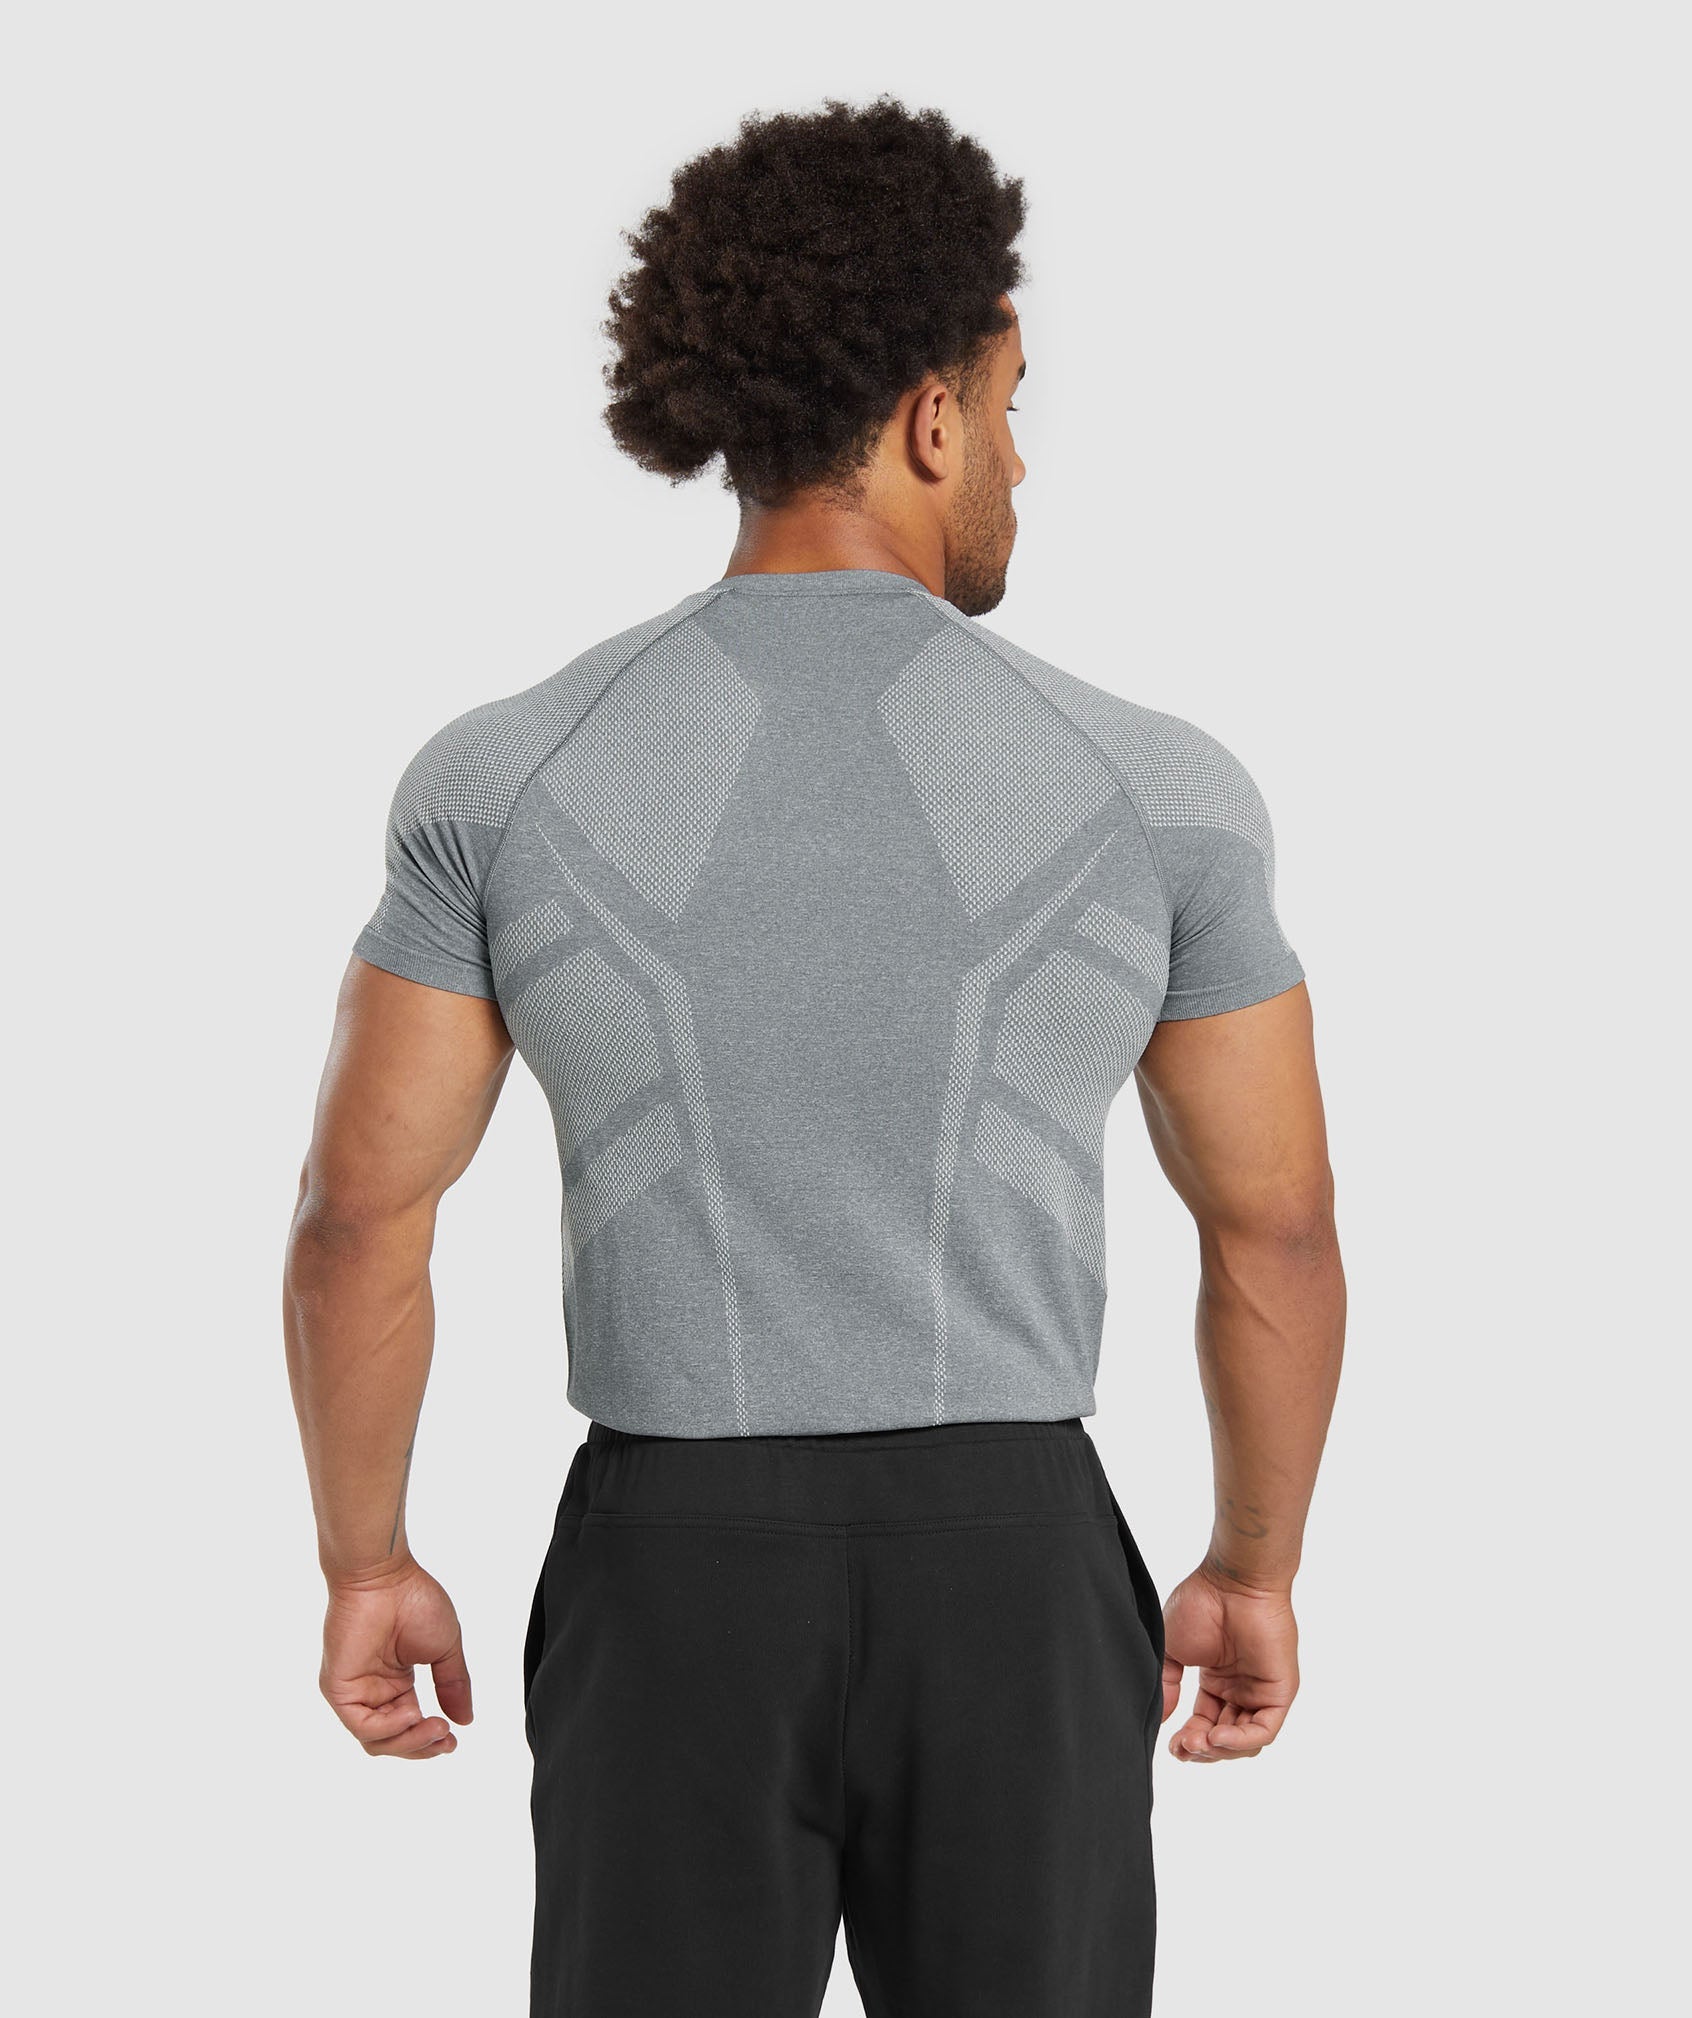 Gymshark Elite Seamless T-Shirt - Pitch Grey/Light Grey